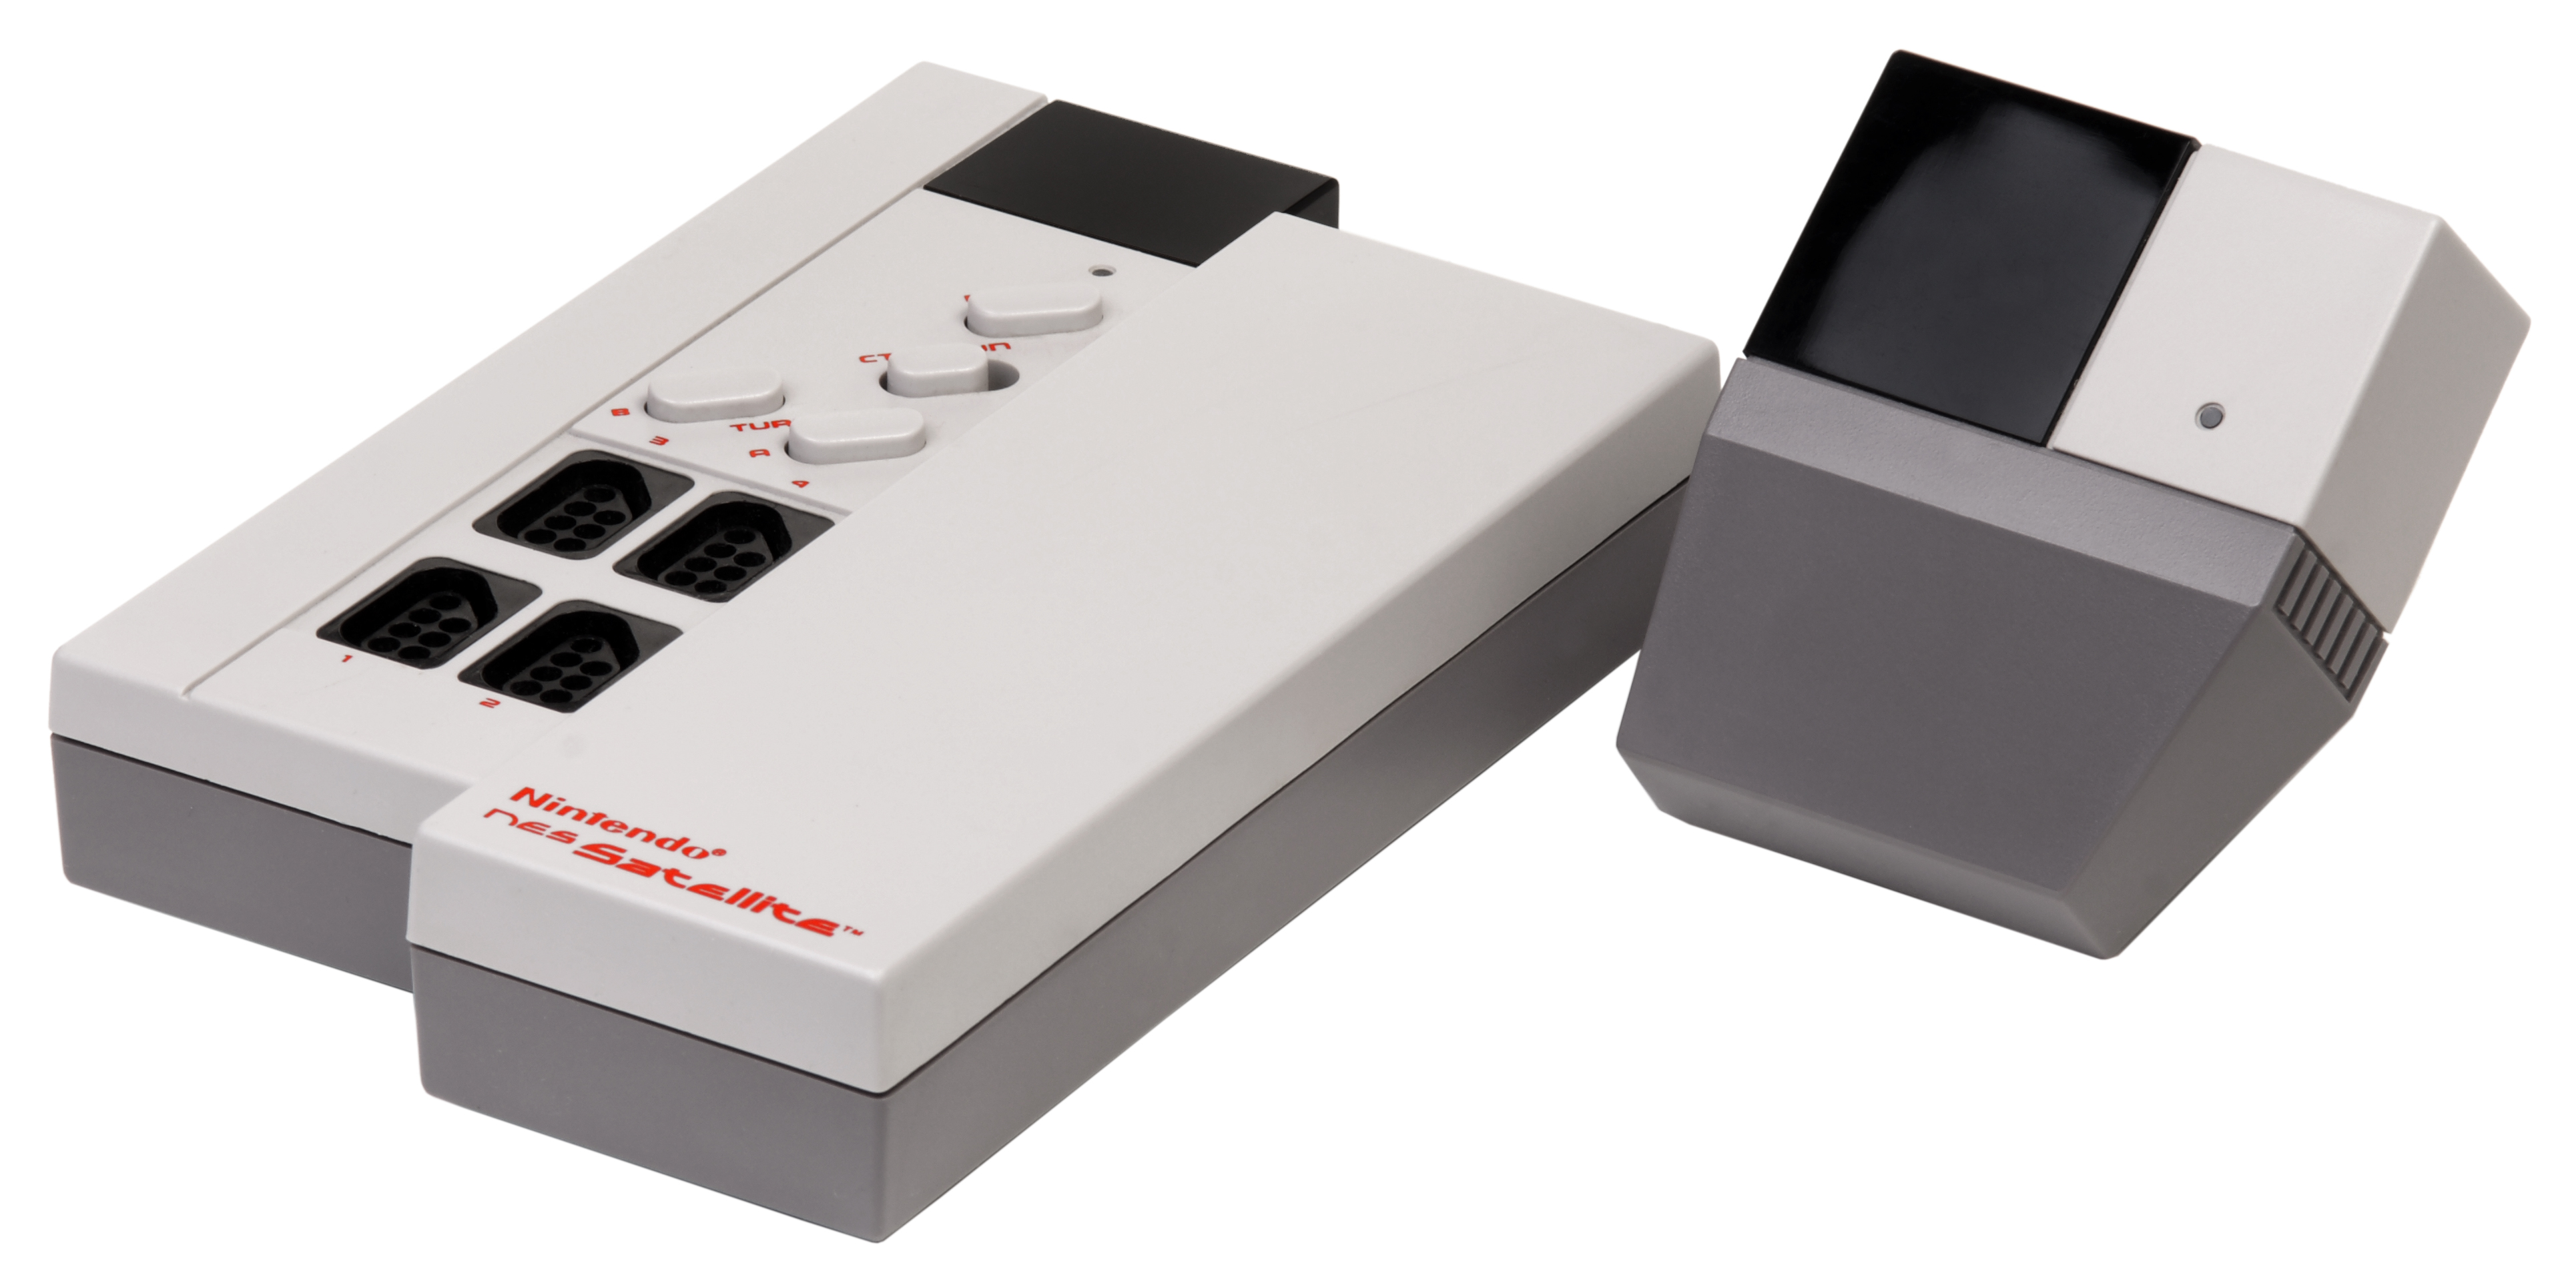 retro video game technology 1980s - NES Satellite